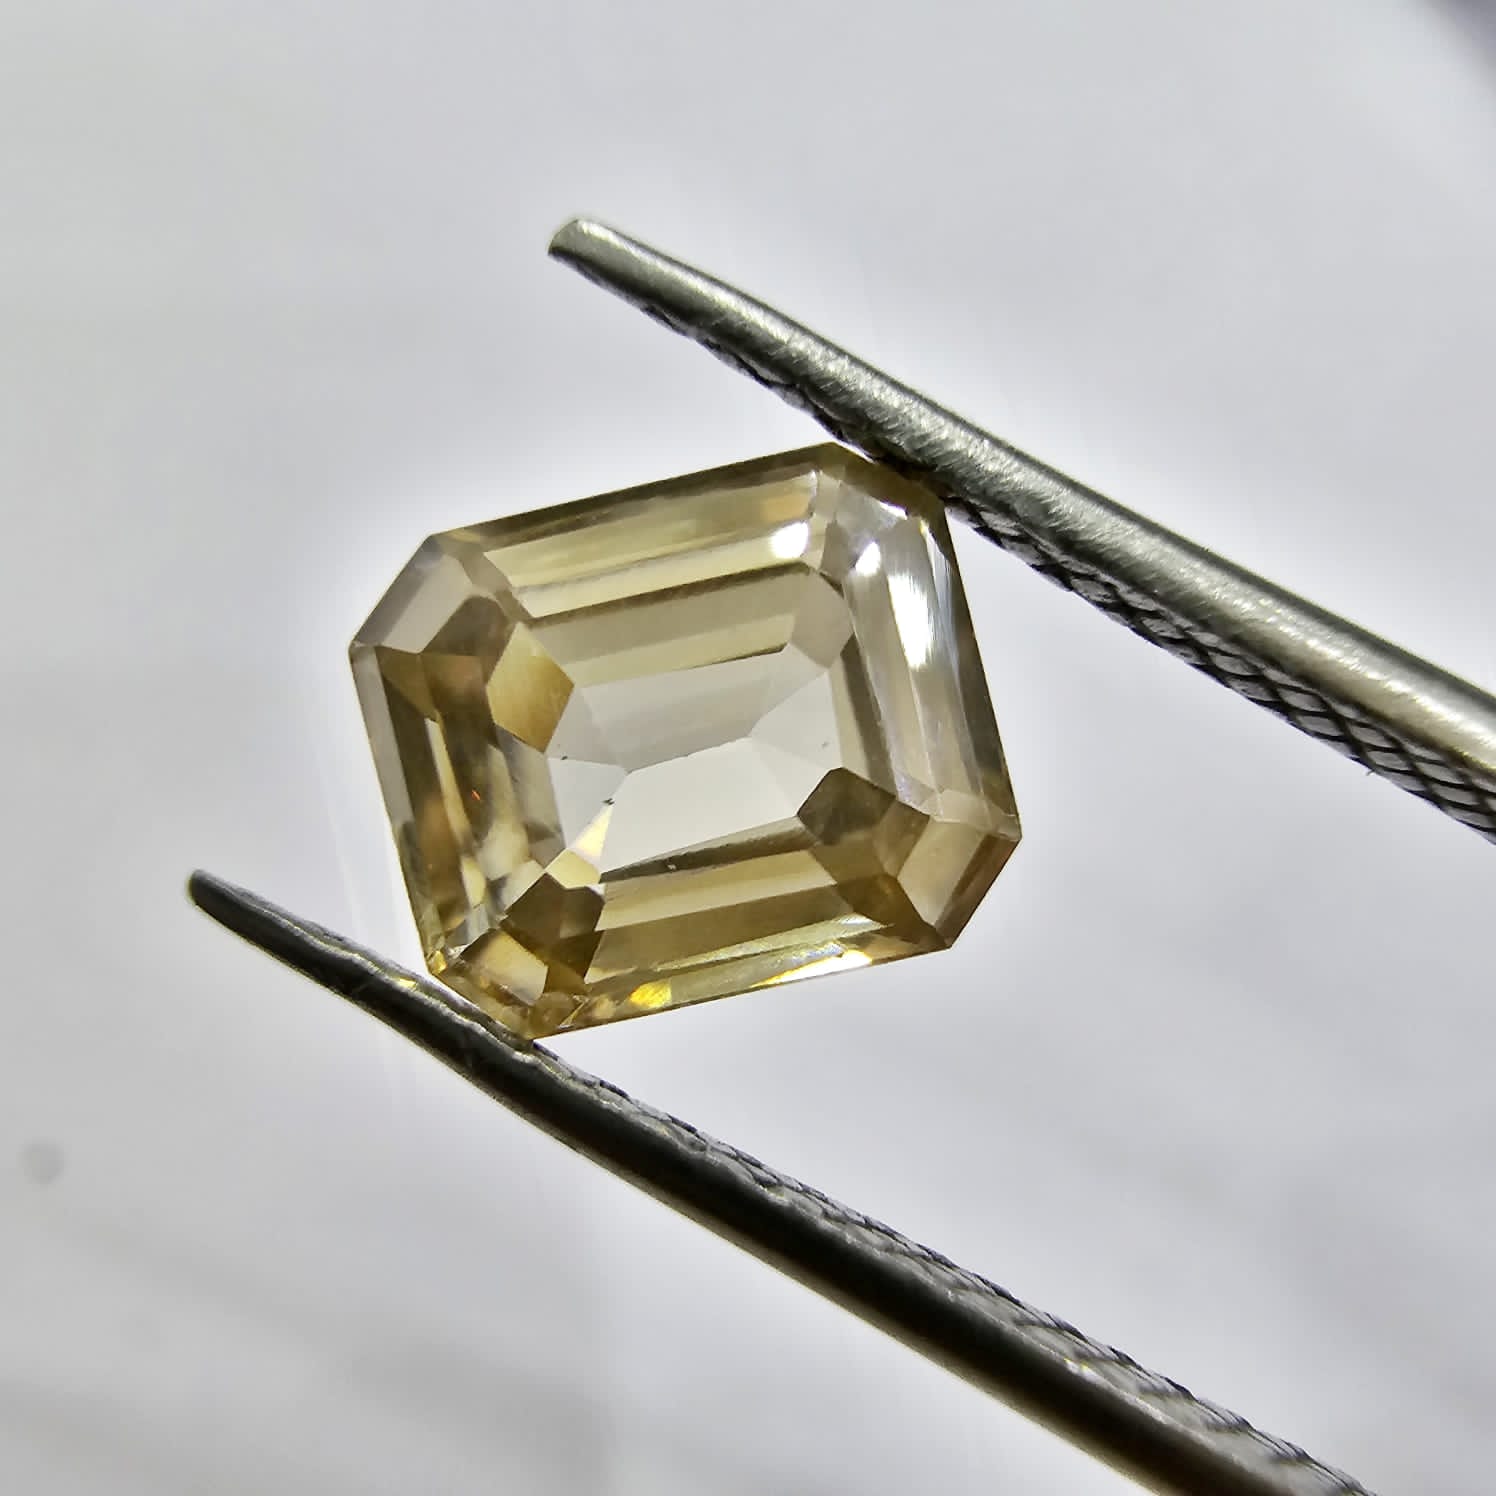 1 Pcs of Moissanite Rectangle Cut Gemstones | 8x7mm Size - The LabradoriteKing